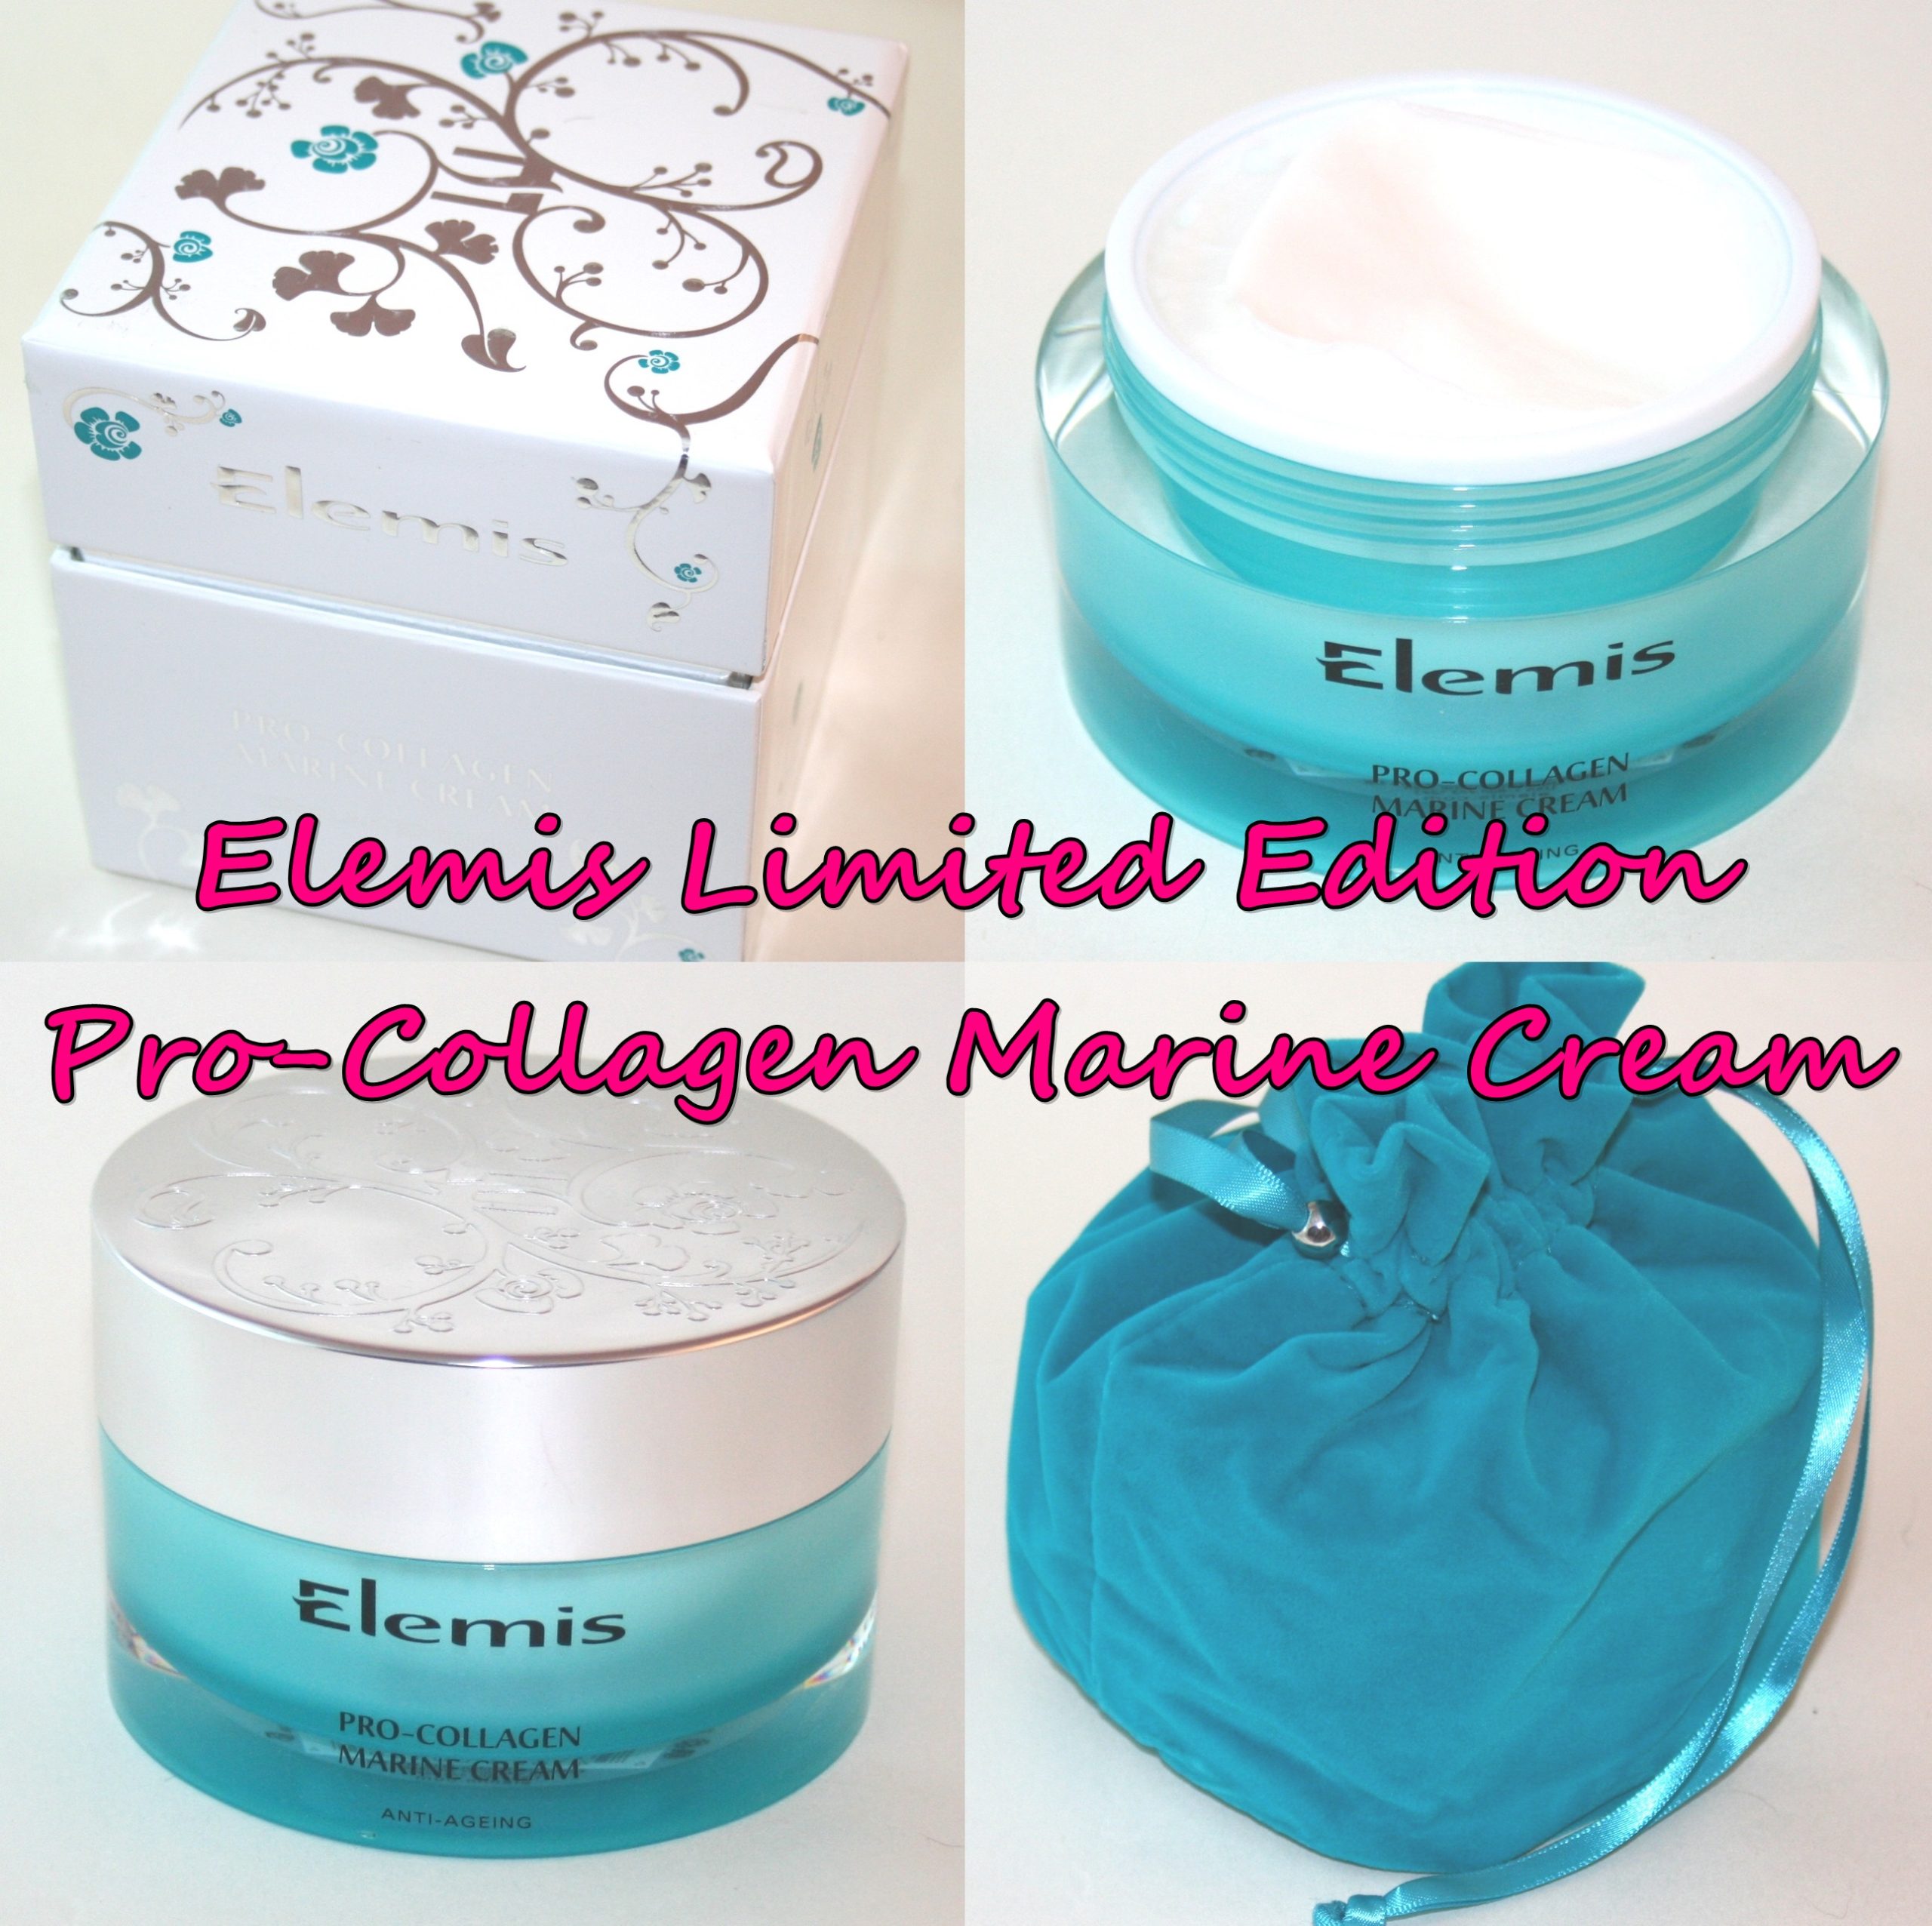 Competition: Win Elemis Limited Edition Pro-Collagen Marine Cream